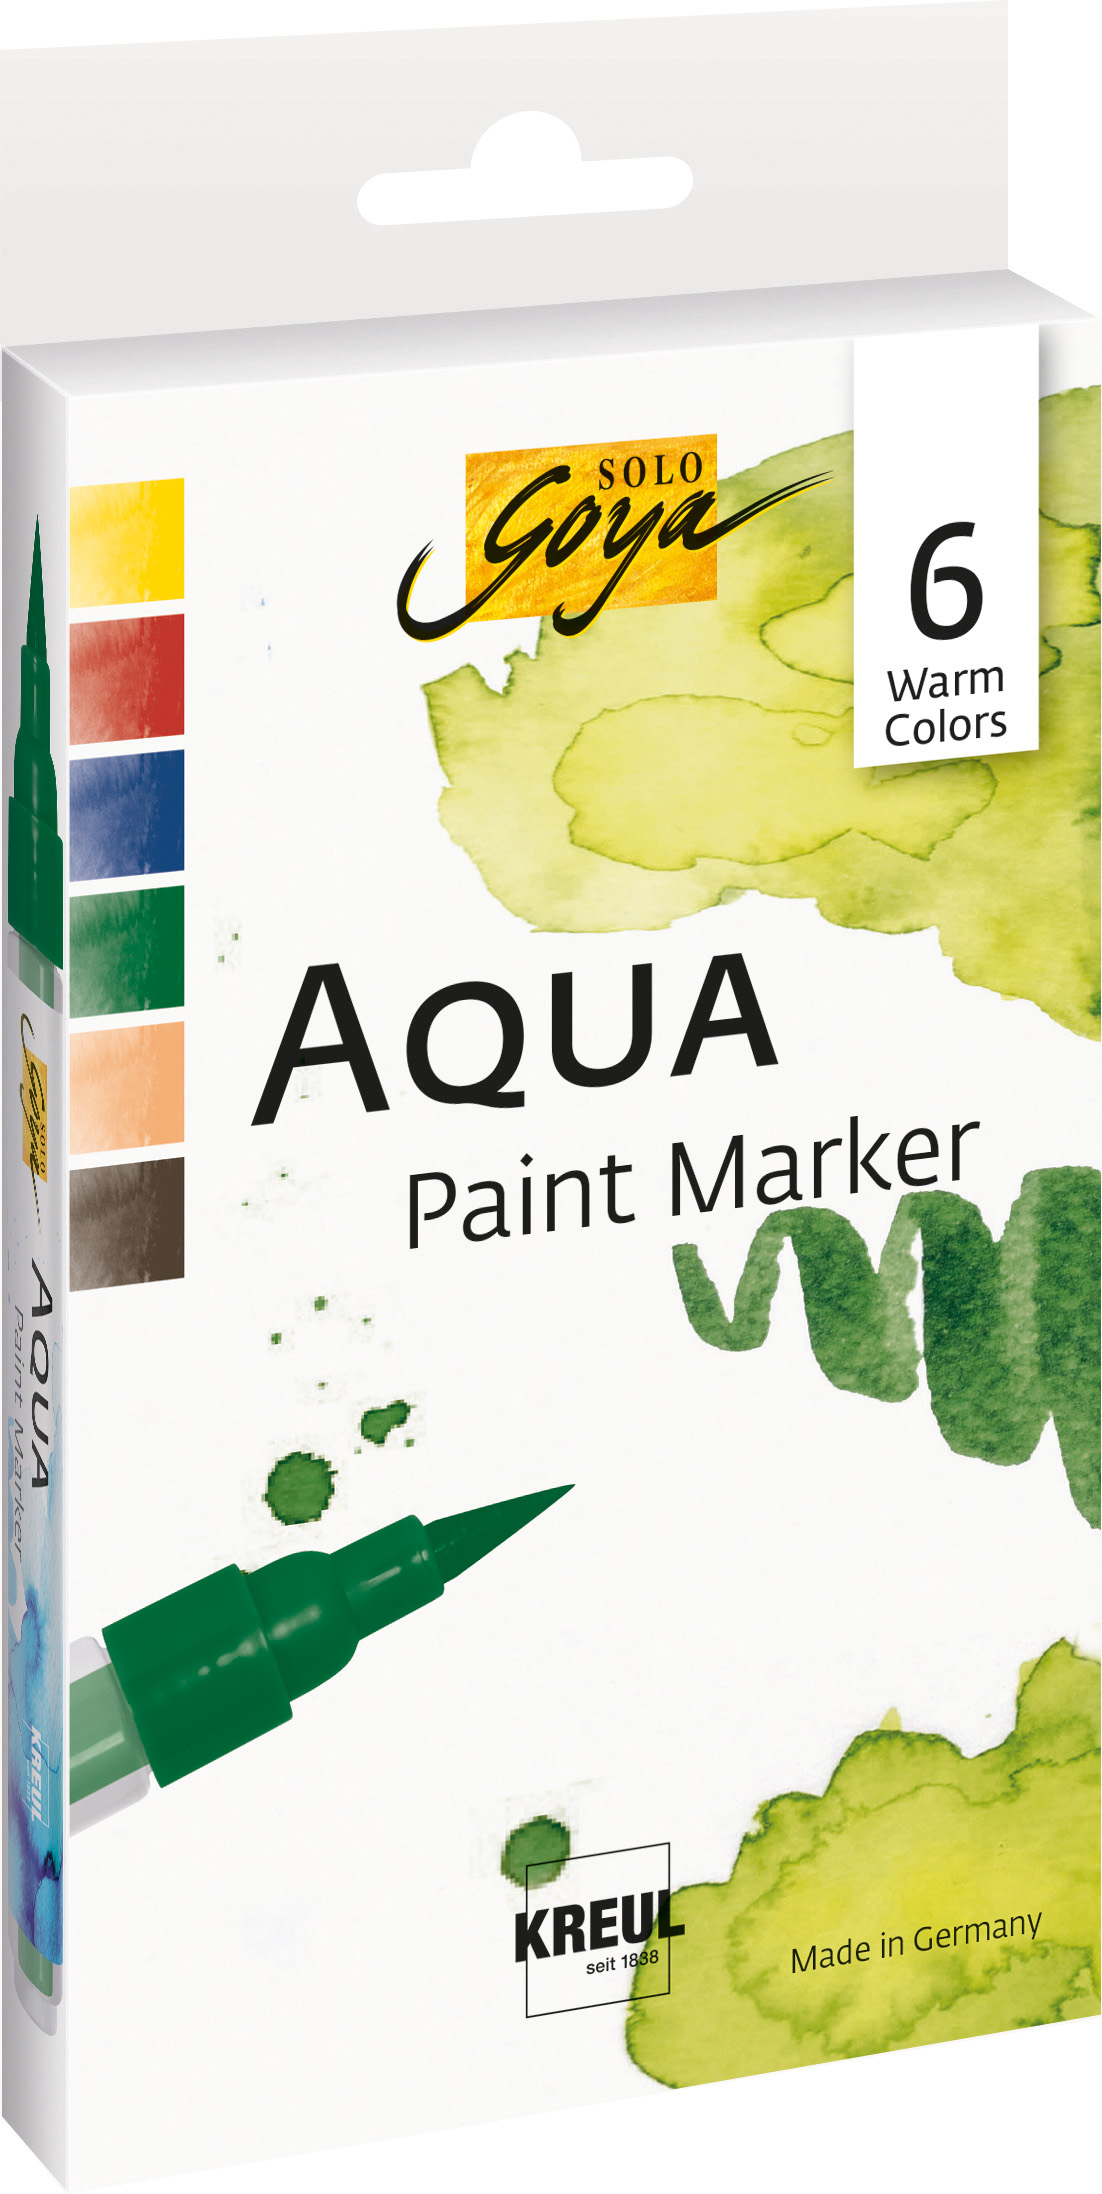 KREUL Solo goya aqua paint penna warm colors set á 6pz prezzo netto